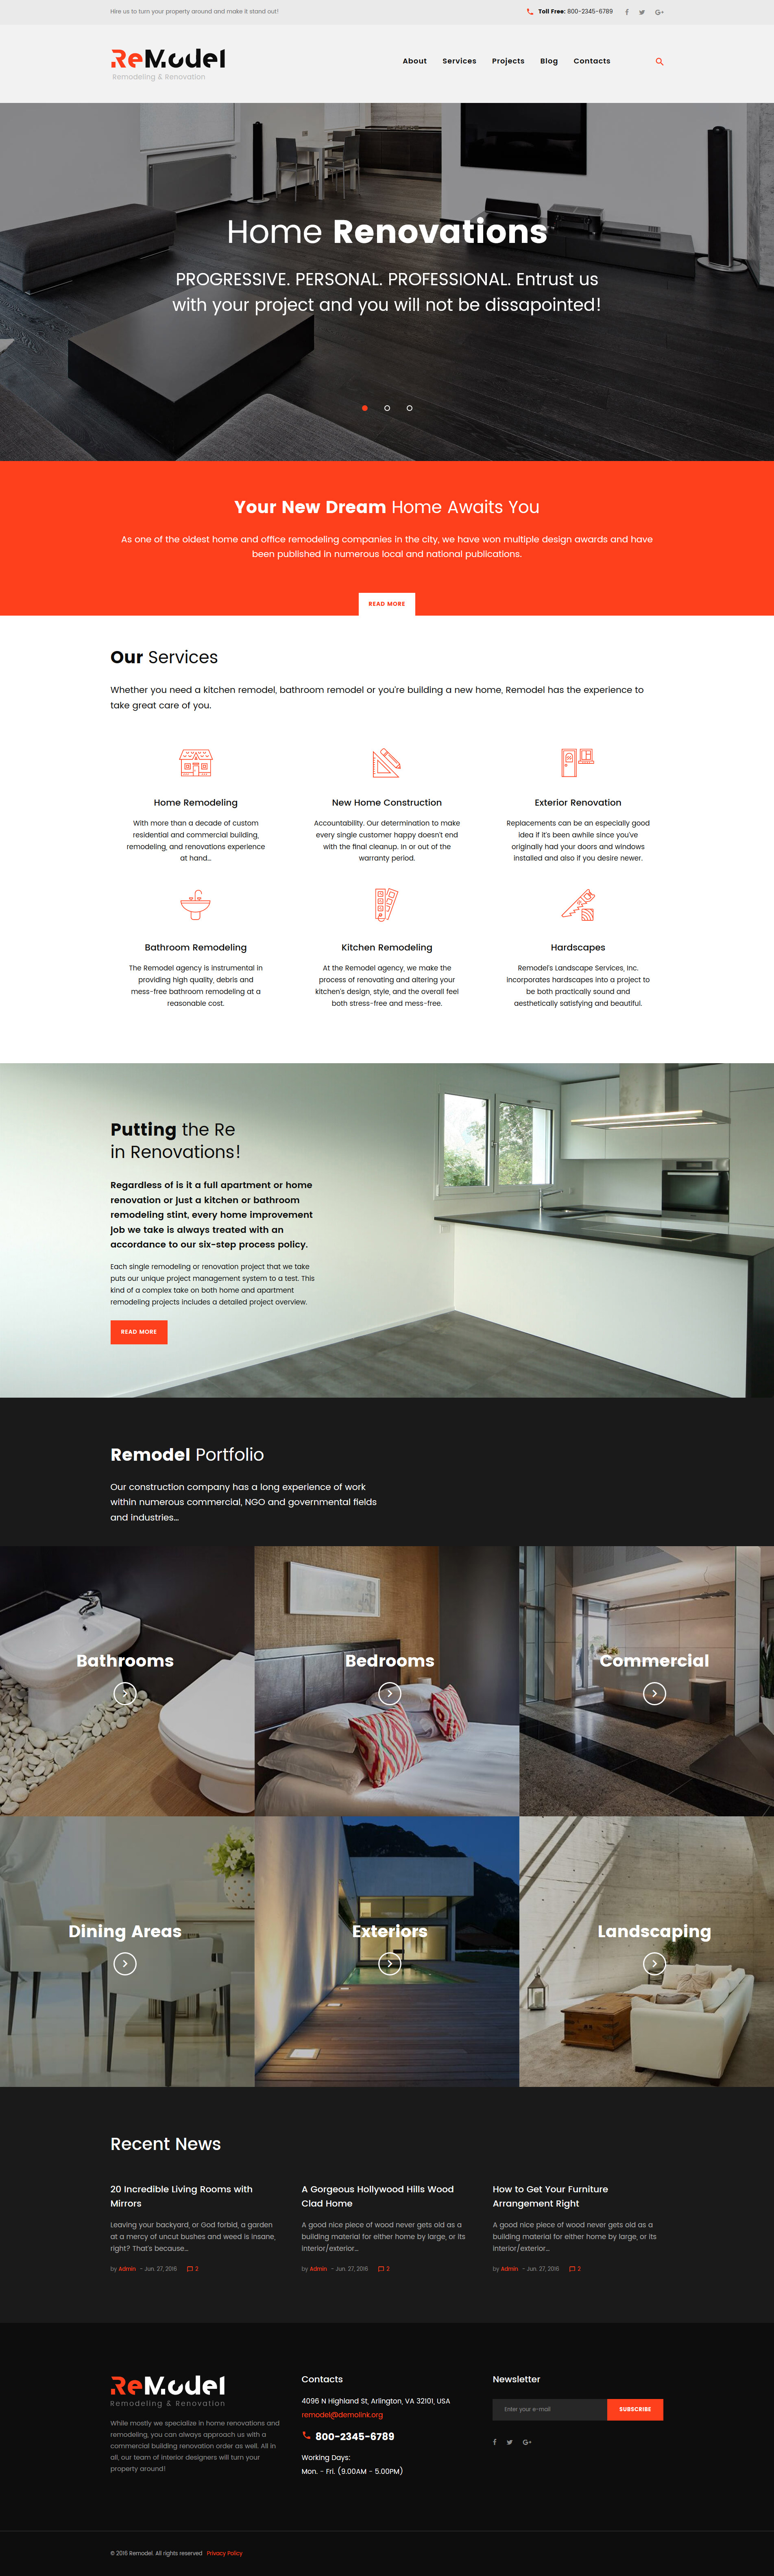 Remodel - Renovation & Interior Design WordPress Theme